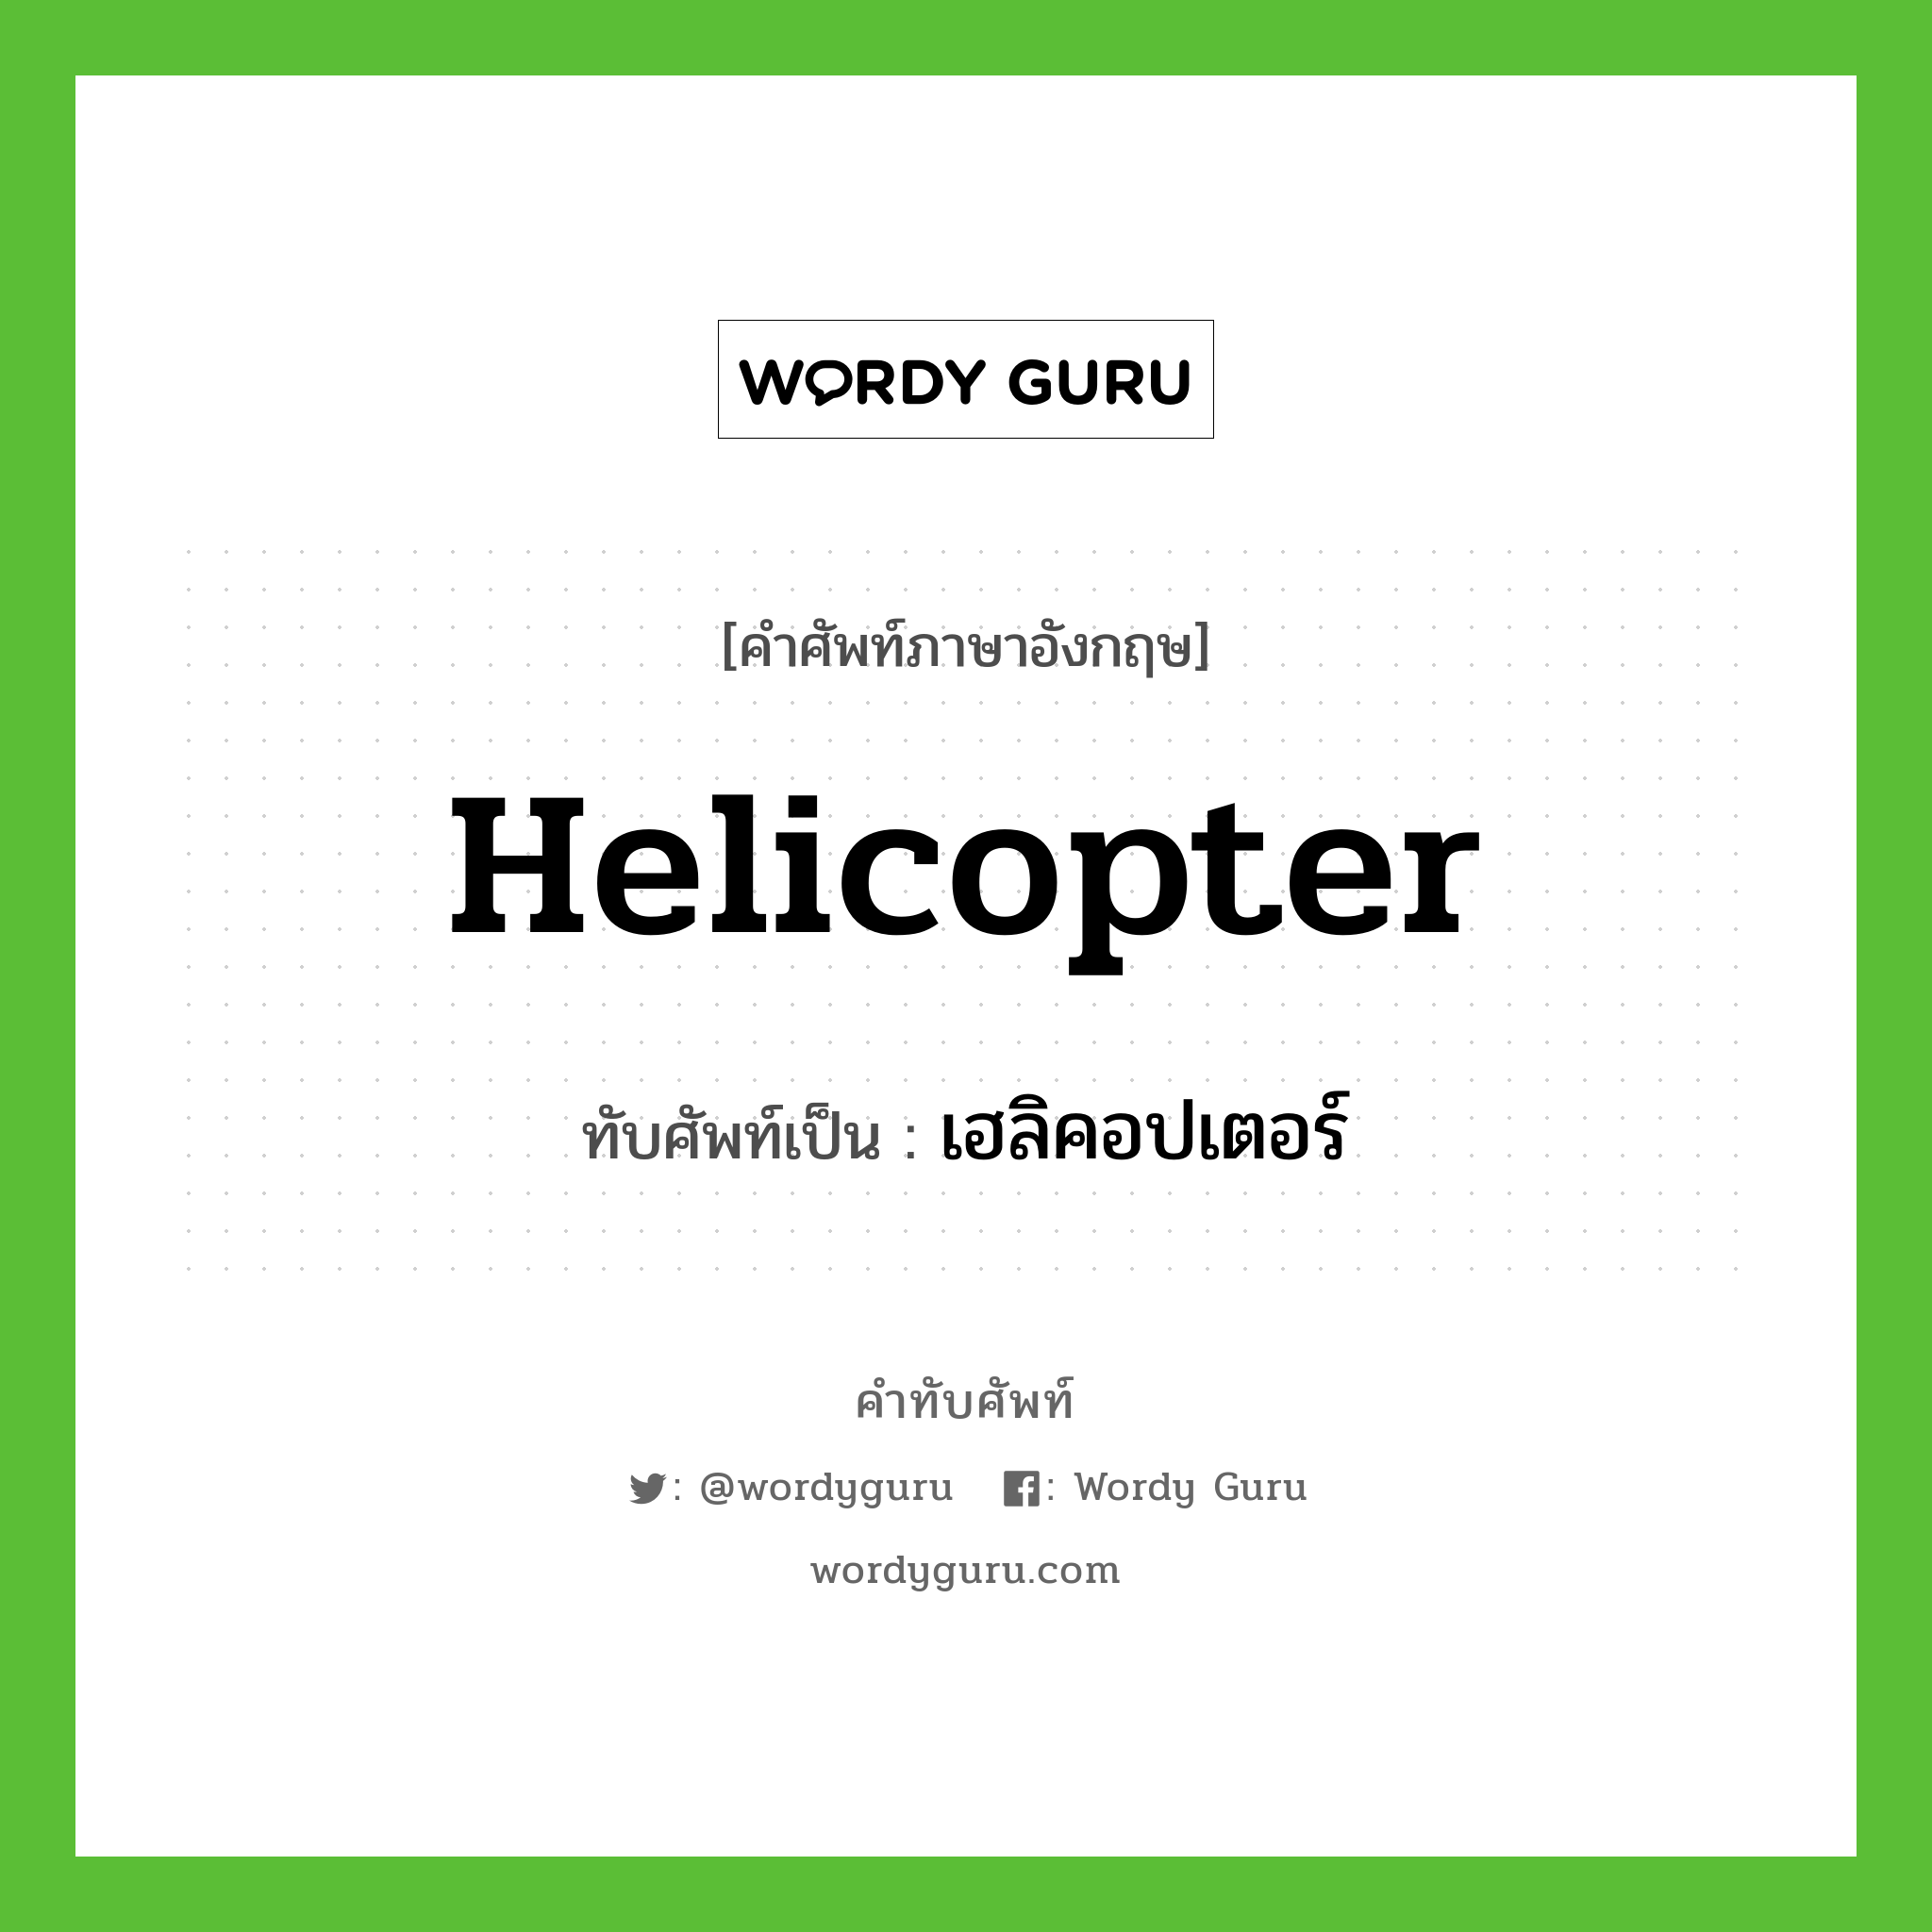 helicopter เขียนเป็นคำไทยว่าอะไร?, คำศัพท์ภาษาอังกฤษ helicopter ทับศัพท์เป็น เฮลิคอปเตอร์